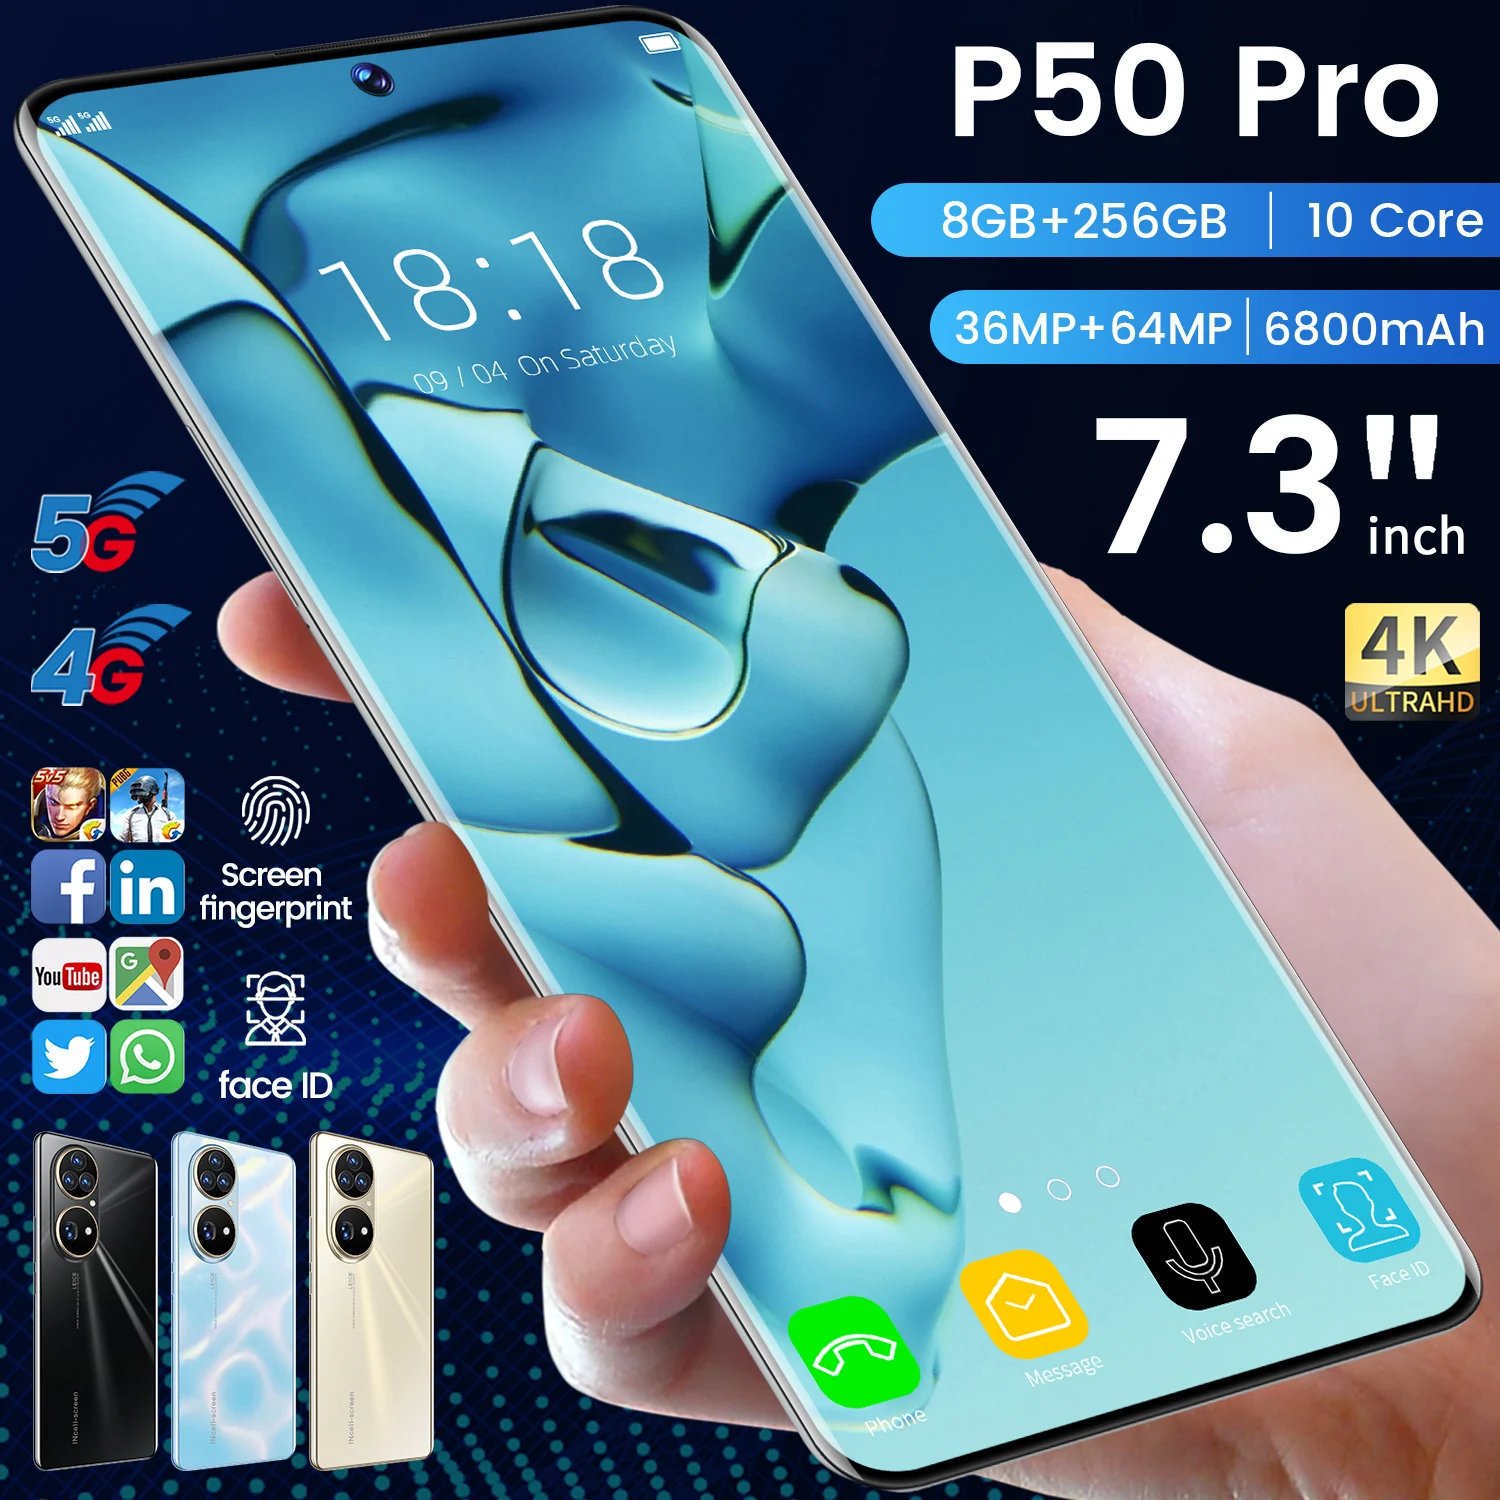 

wholesale P50pro mobile phones 8GB+256GB large memory celulears Camera phone 7.3inch smartphones unlocked factory direct, Golden/black/colorful blue